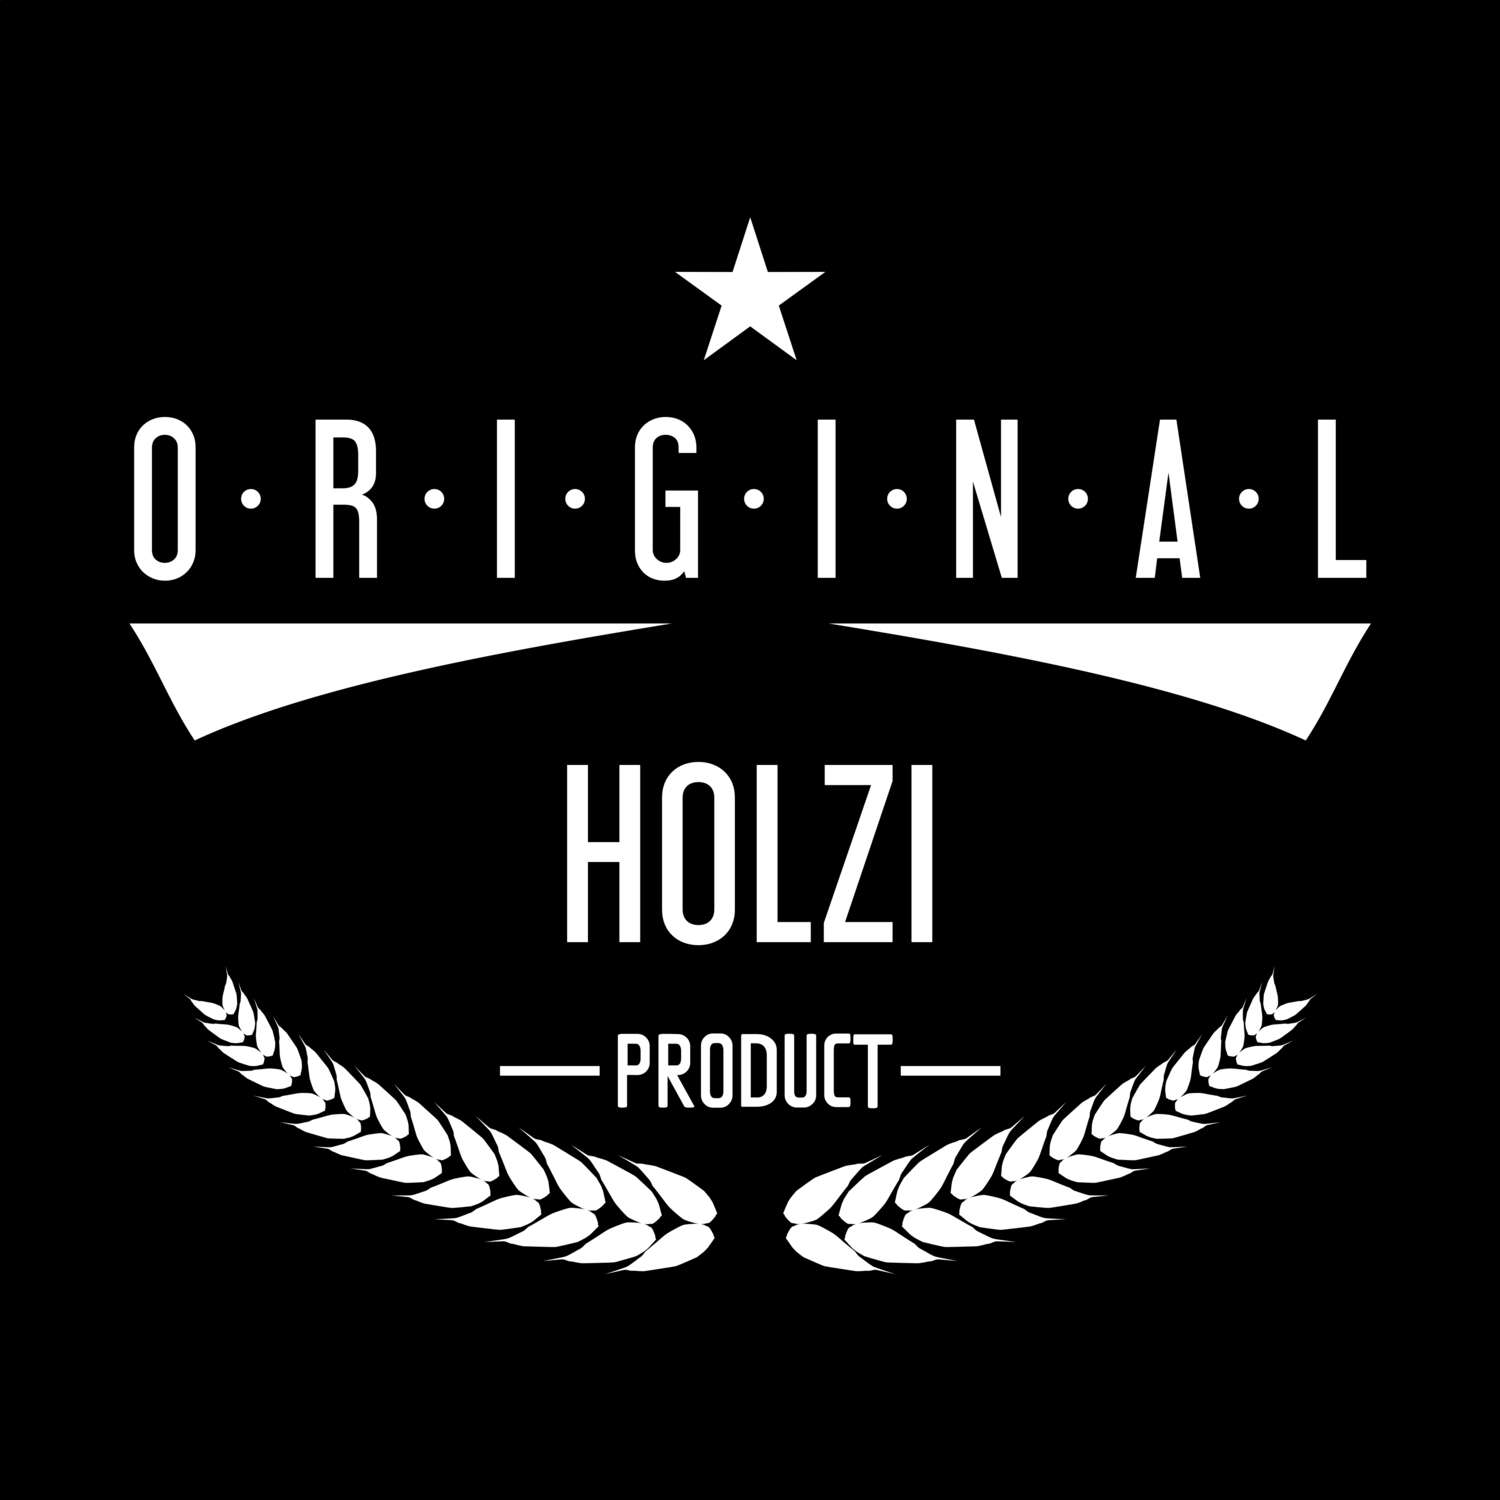 Holzi T-Shirt »Original Product«